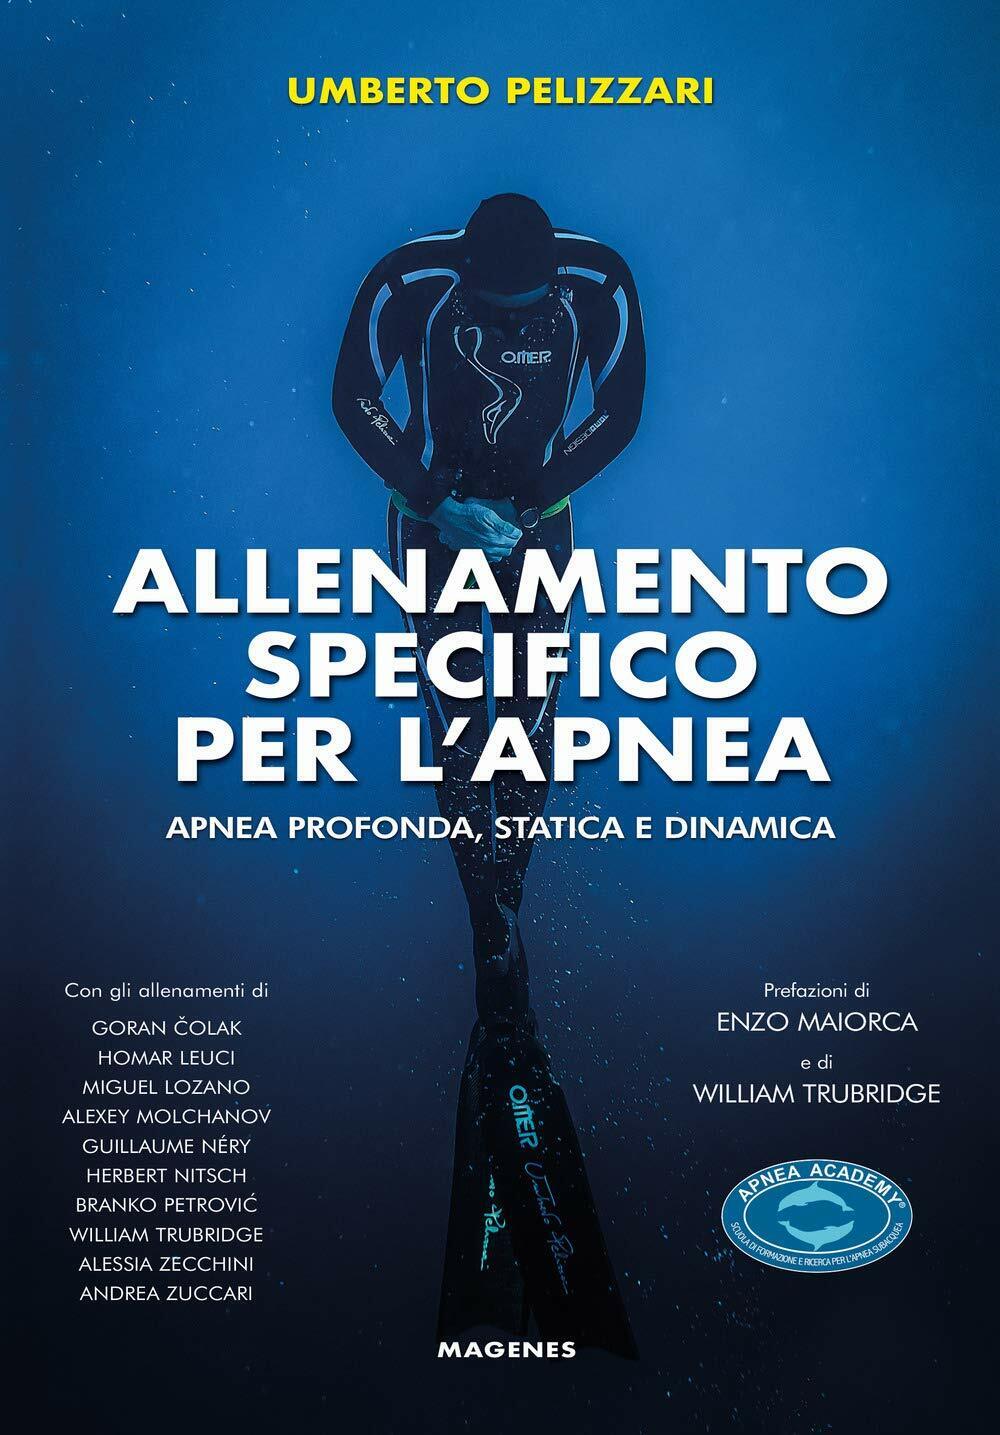 Allenamento specifico per l'apnea - Umberto Pelizzari - Meganes, 2020